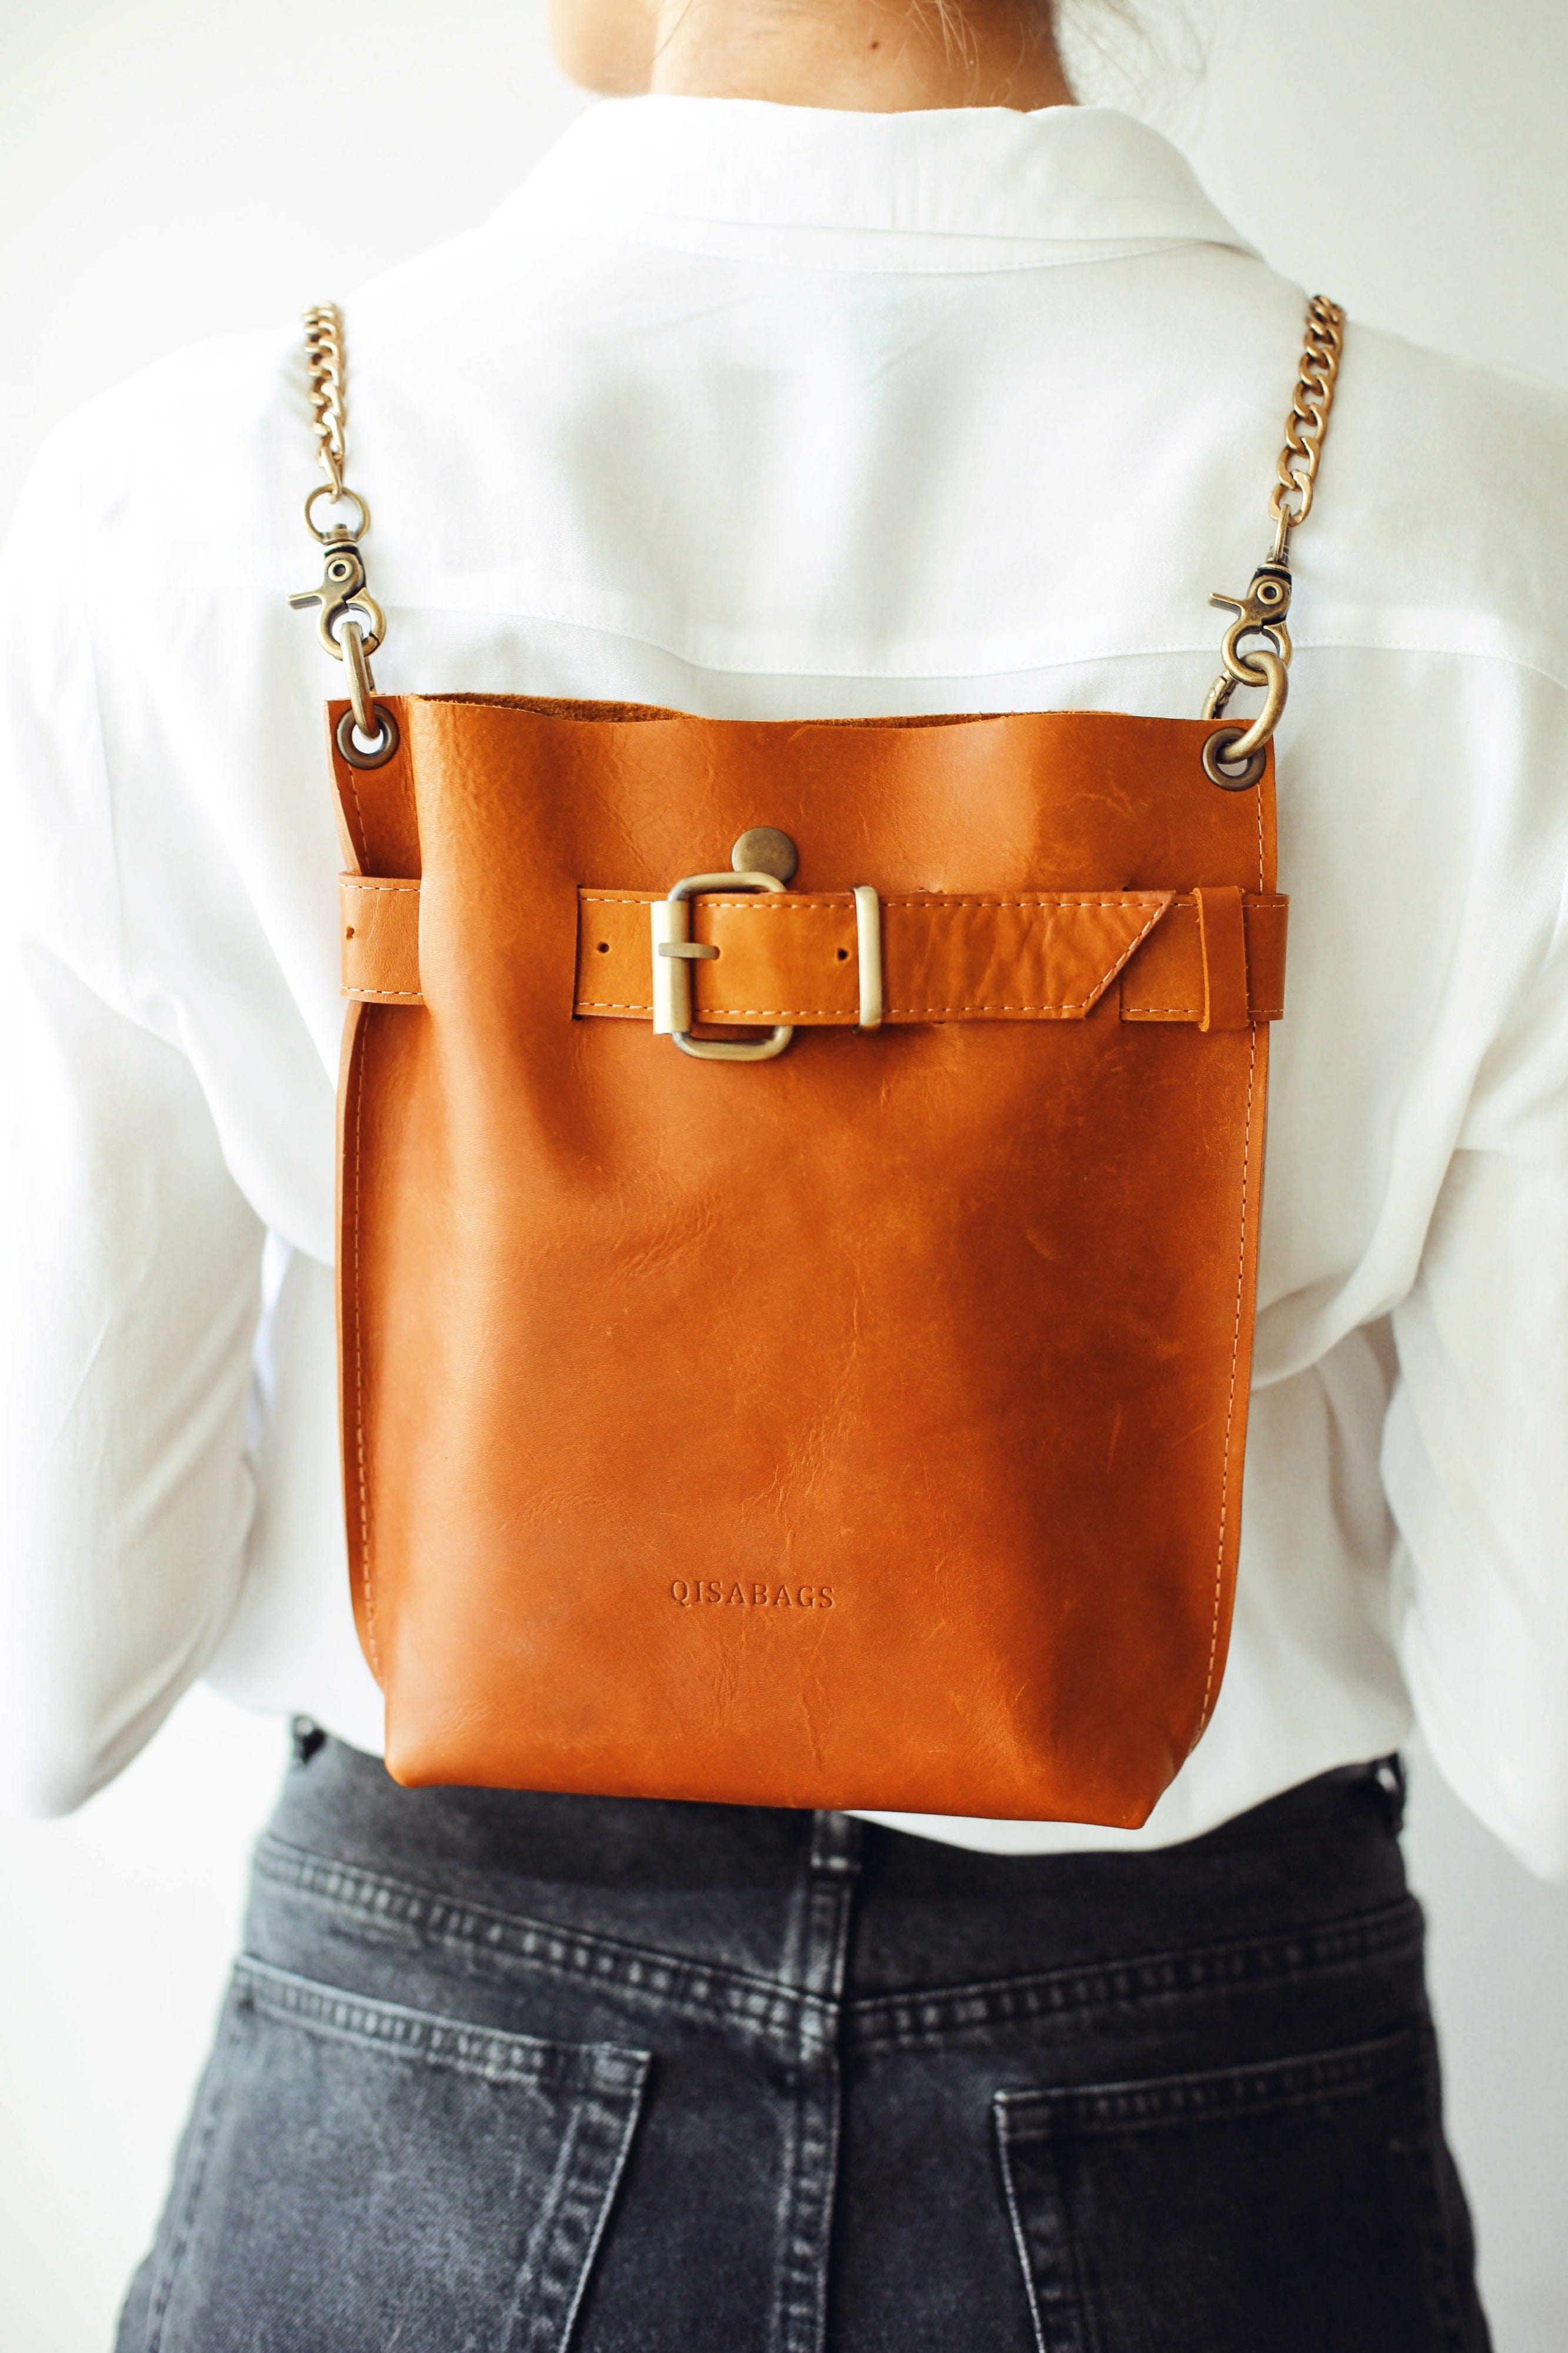 VALENTINA Black & Tan Leather Small Crossbody Purse Bag-NICE | eBay